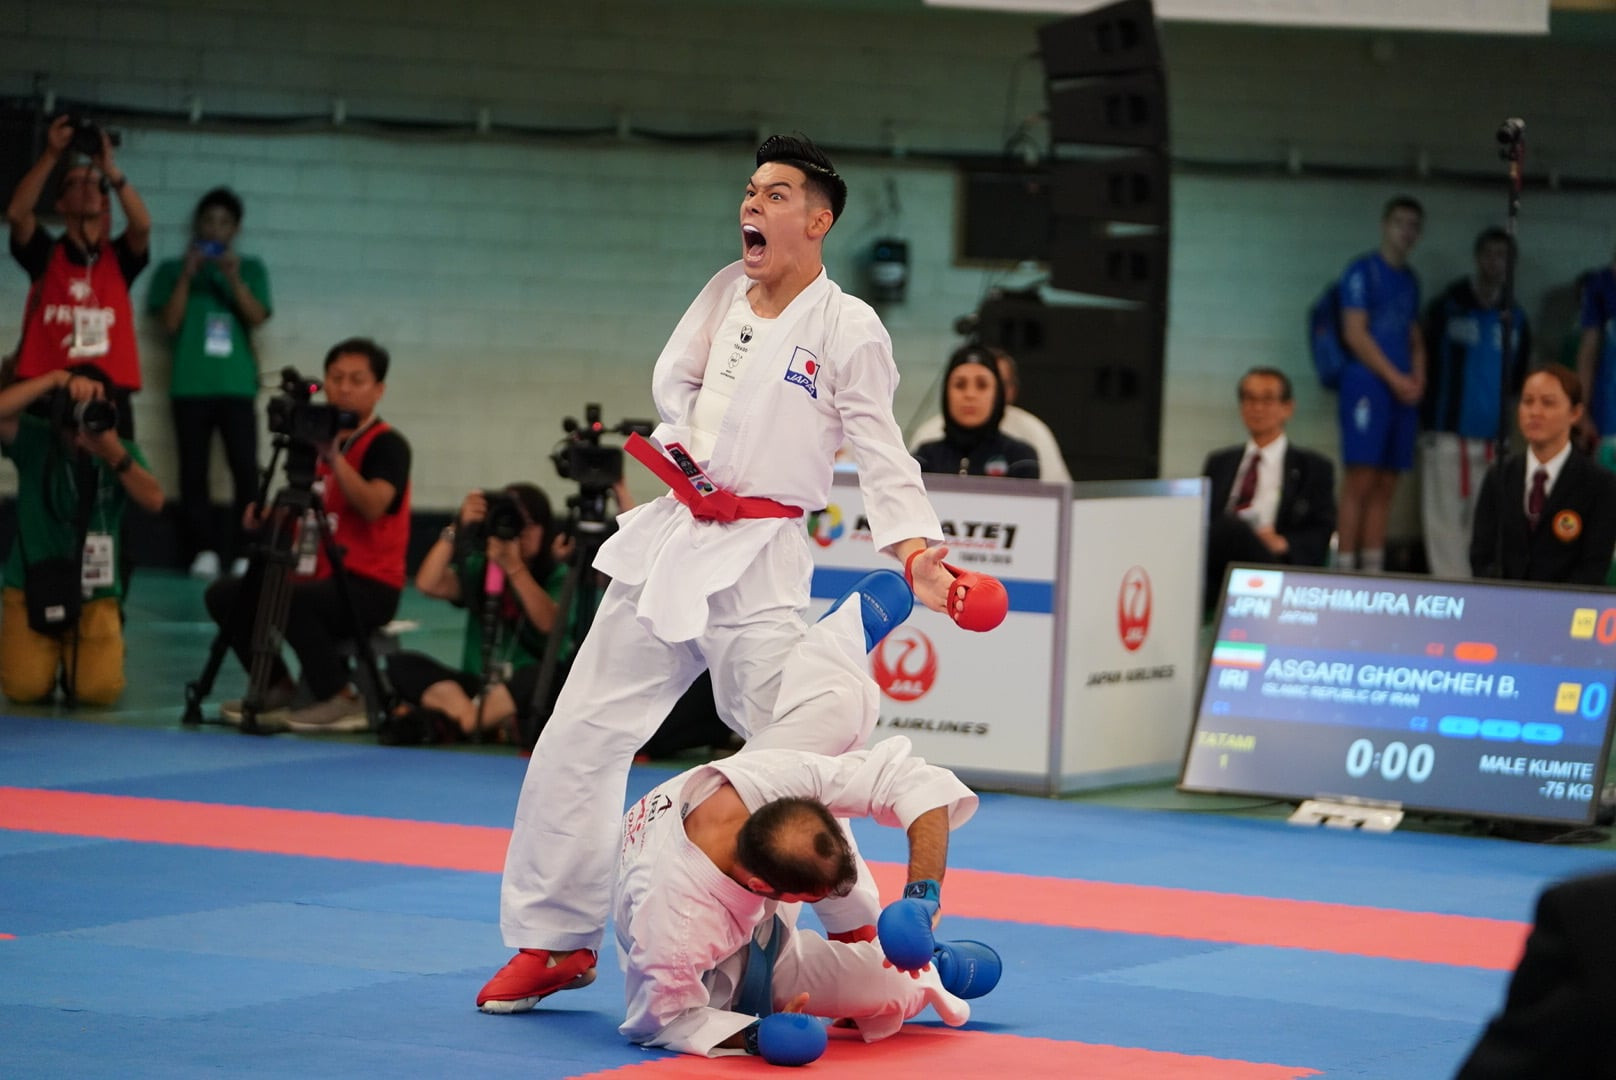 Ken Nishimura of Japan qualified for the men's kumite 75kg final by defeating Iranian Bahman Ghoncheh Asgari by 